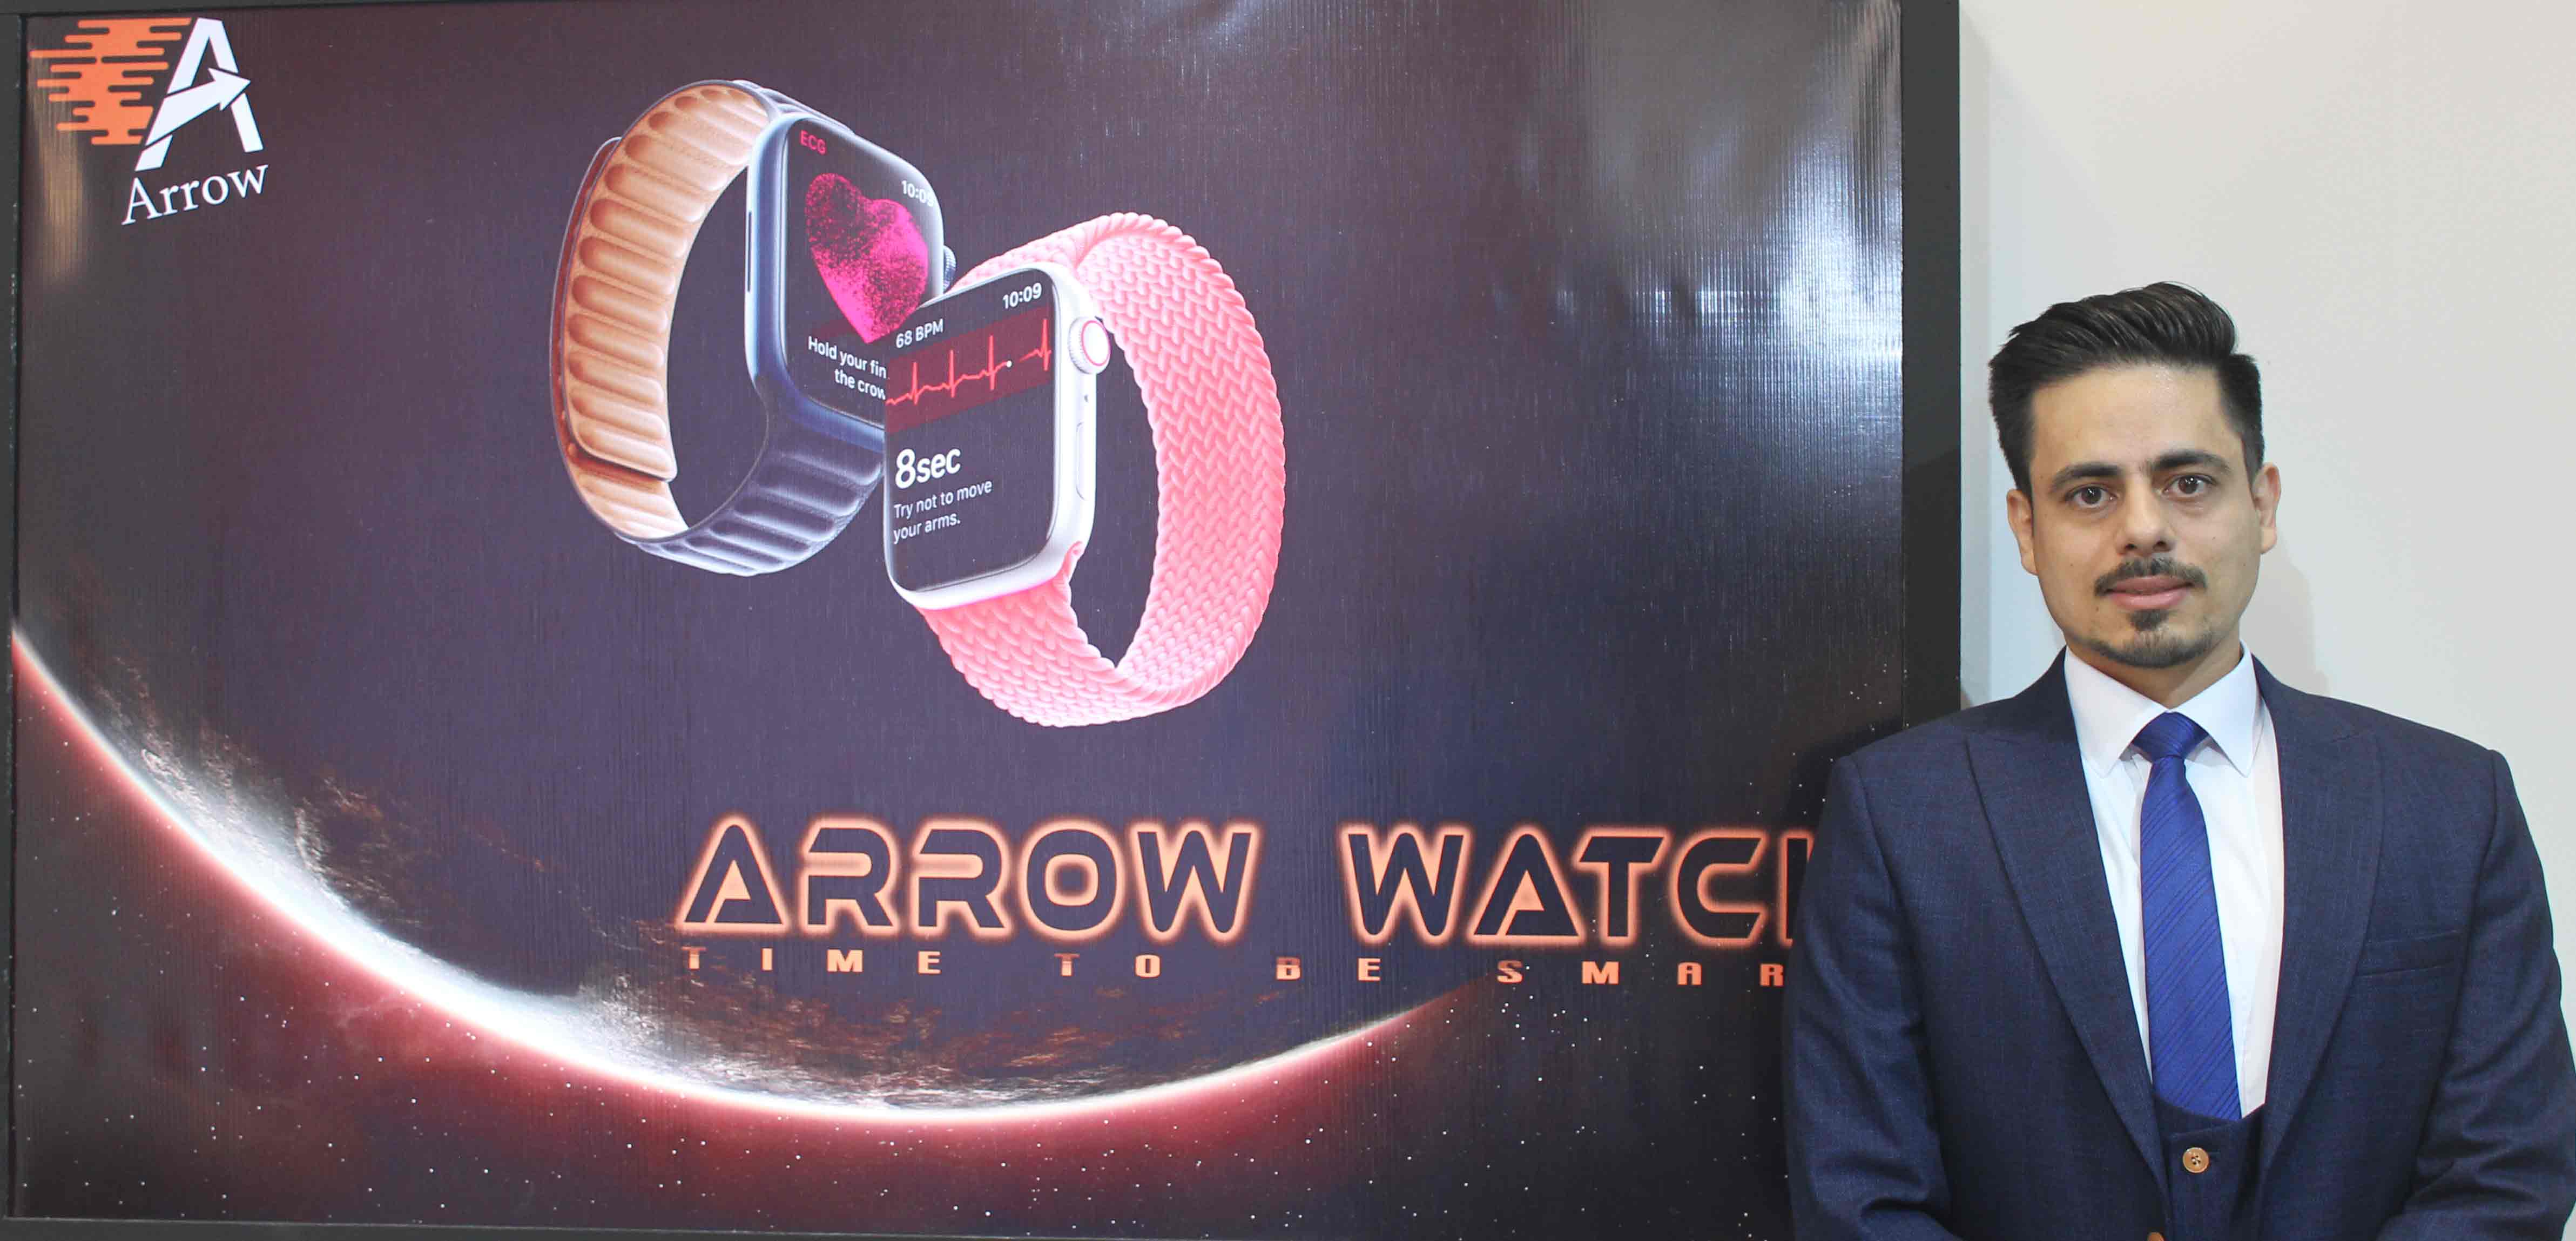 Arrowwatch اولین ارائه کننده ساعت‌های هوشمند با گارانتی،پشتیبانی کلیه قطعات وخدمات کامل درایران است/ با ساعت‌های هوشمند روزانه می توان ازمیزان مصرف کالری، ضربان قلب، فشار خون و مسافت طی شده آگاه شد/ توانایی صحبت کردن با ساعت هوشمند بجای موبایل